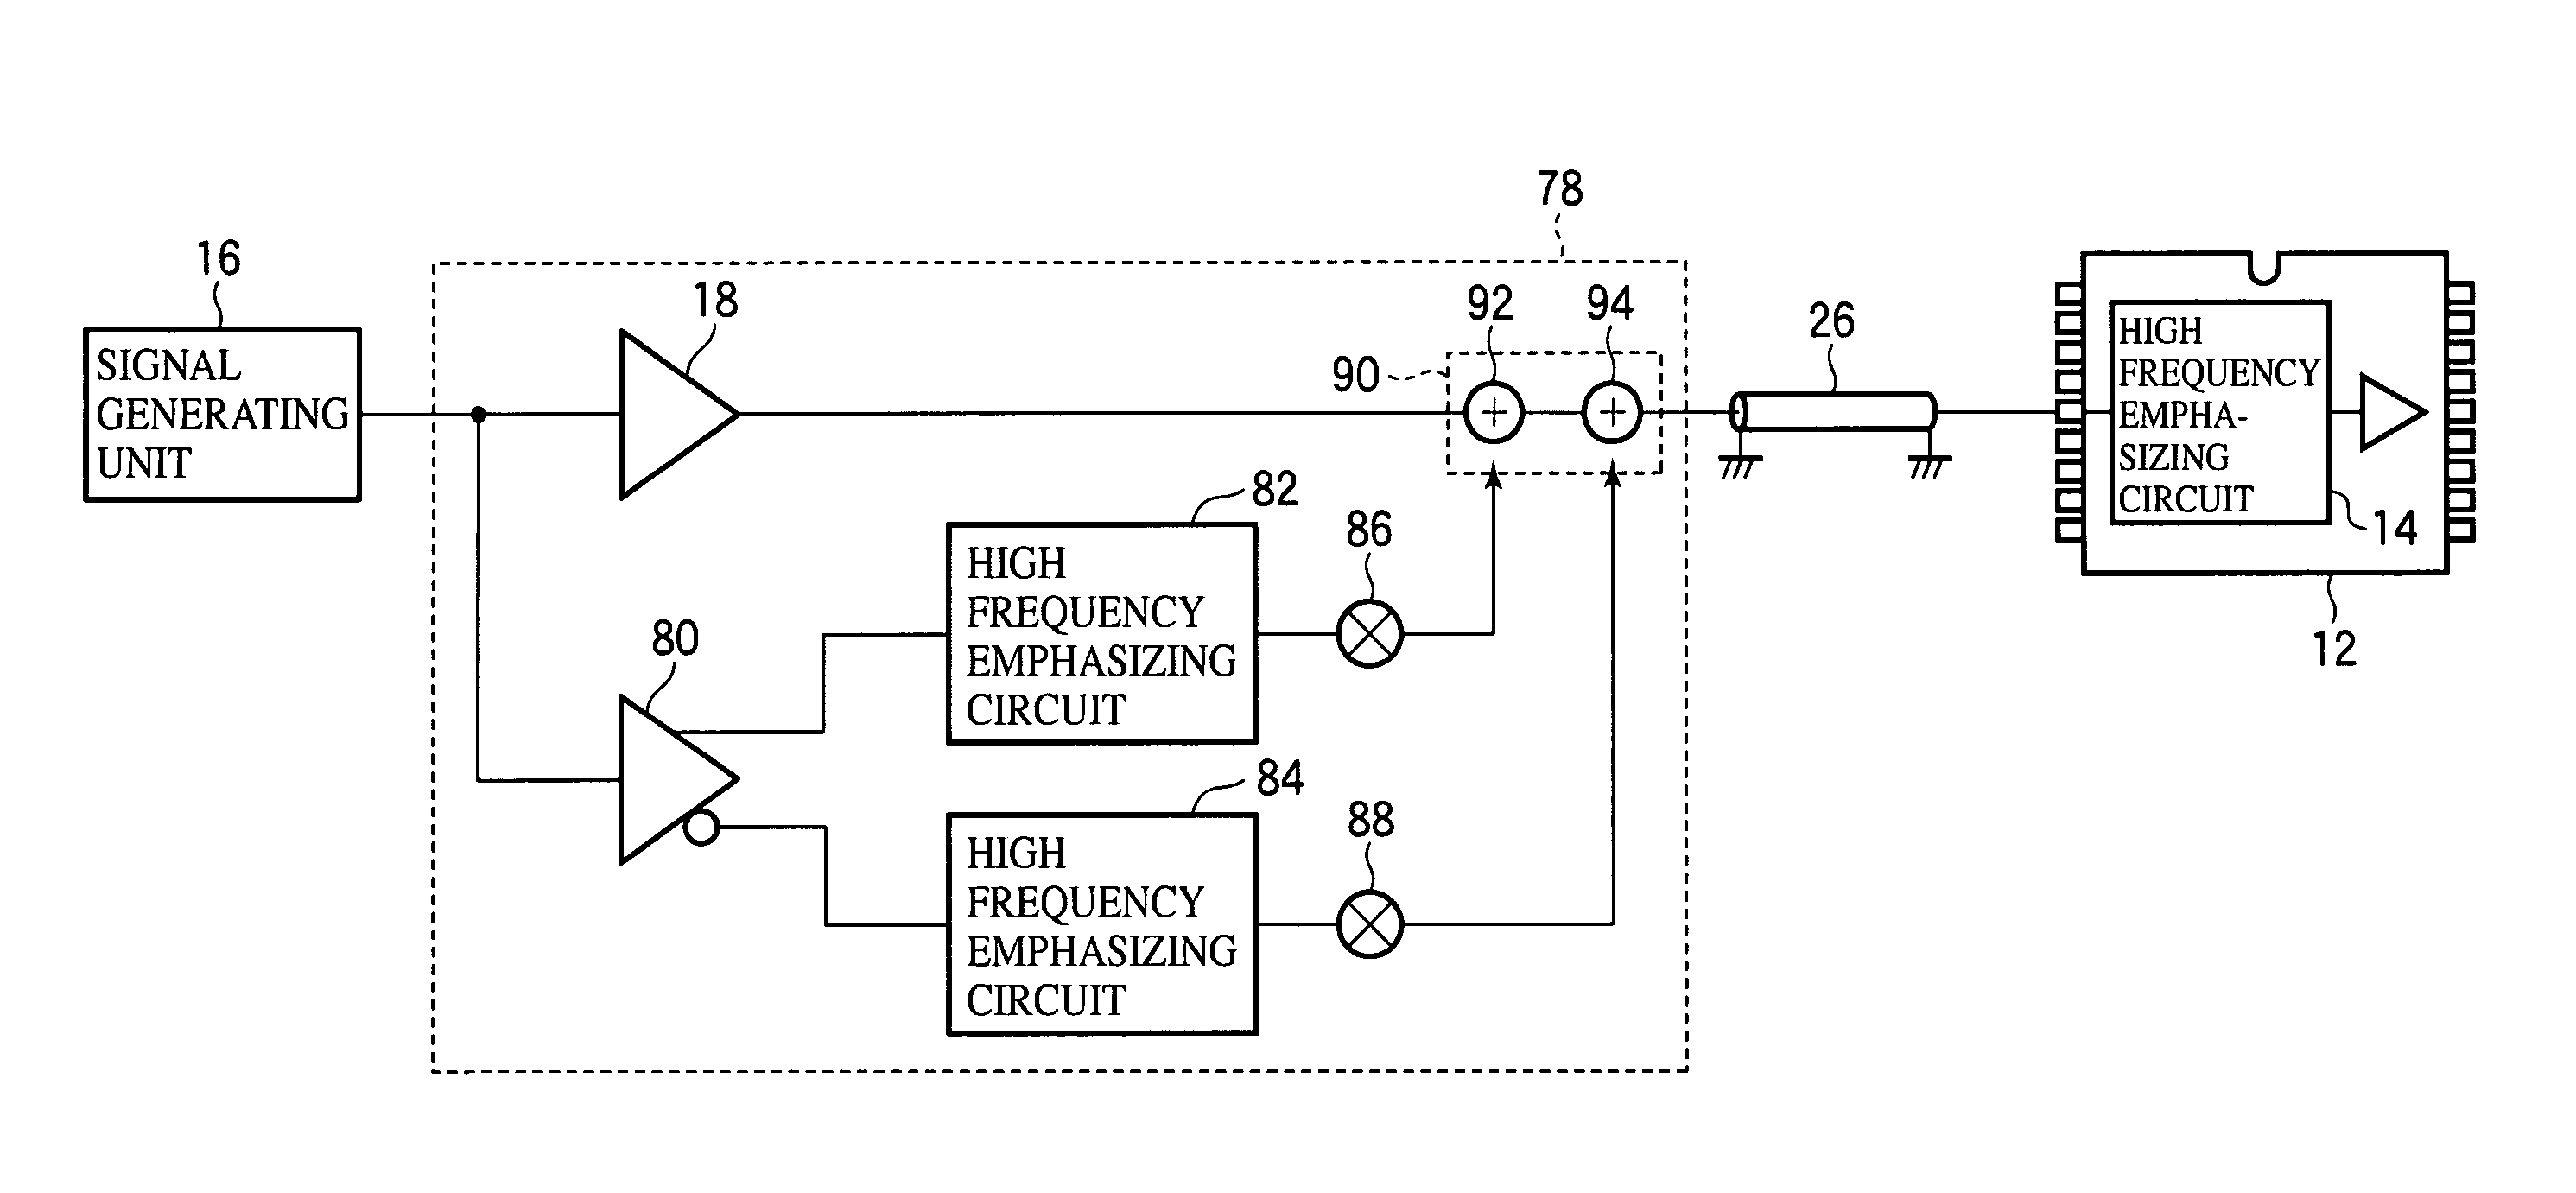 Driver circuit for producing signal simulating transmission loss